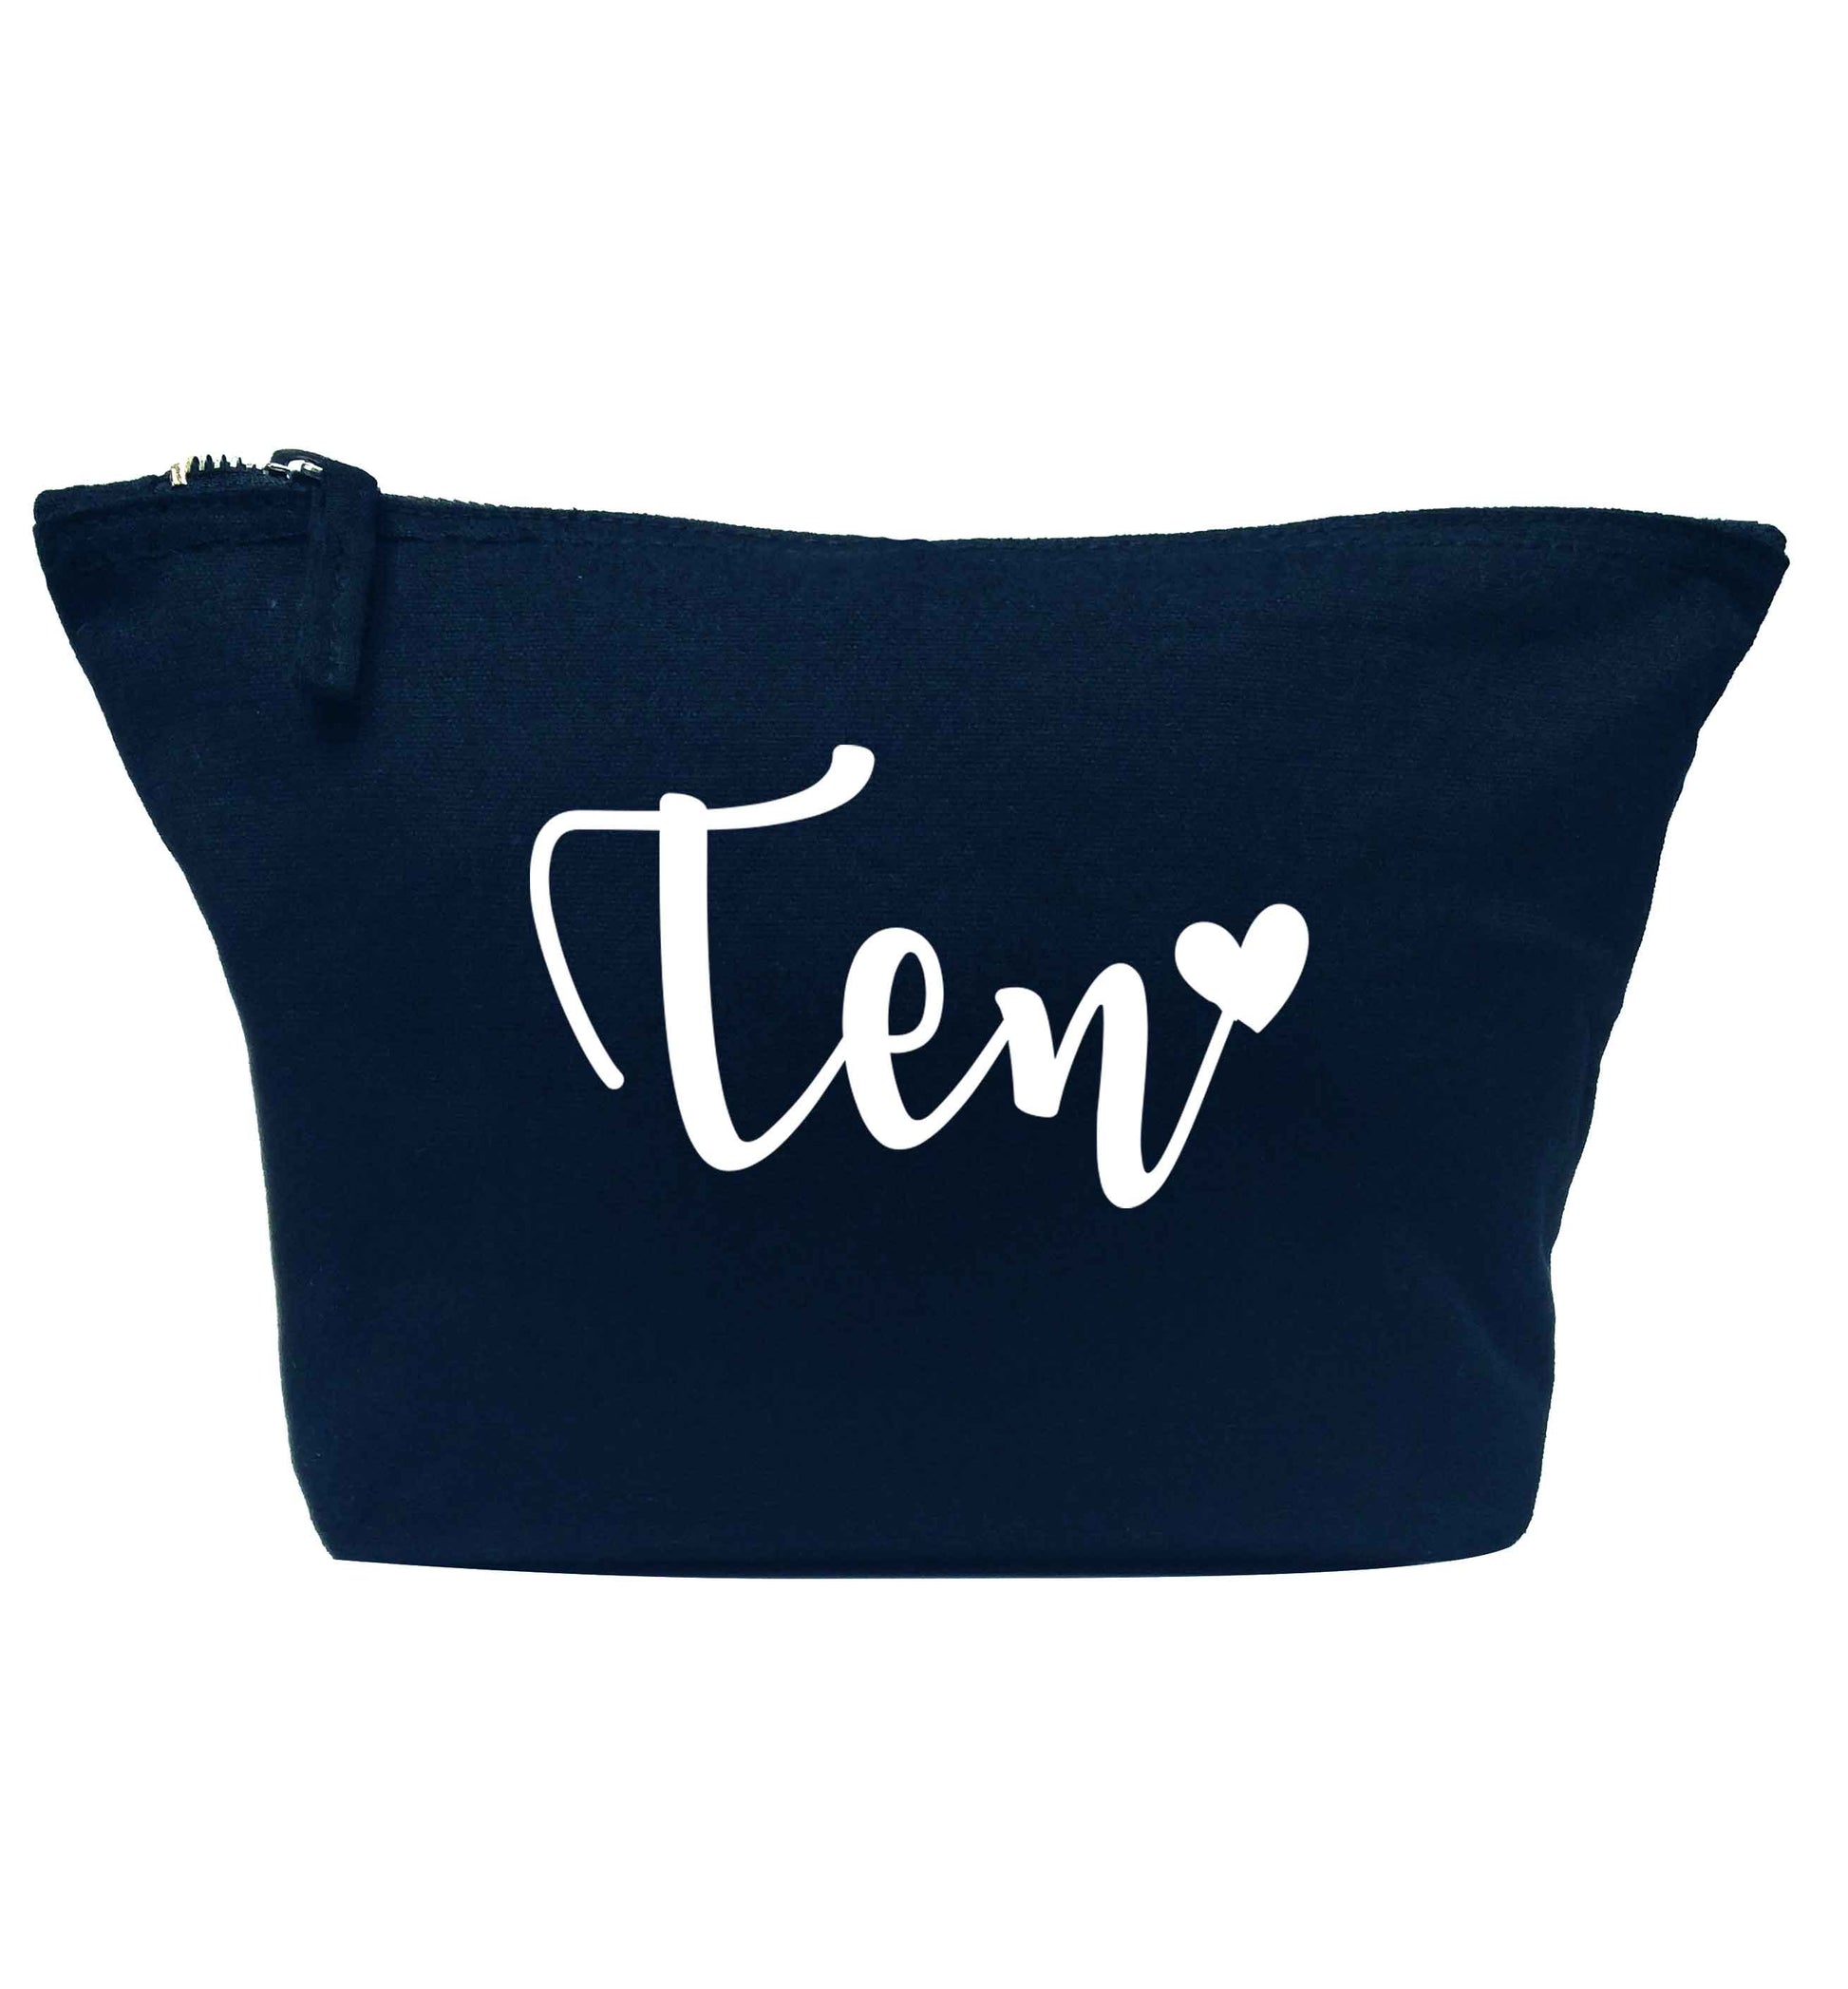 Ten and heart navy makeup bag